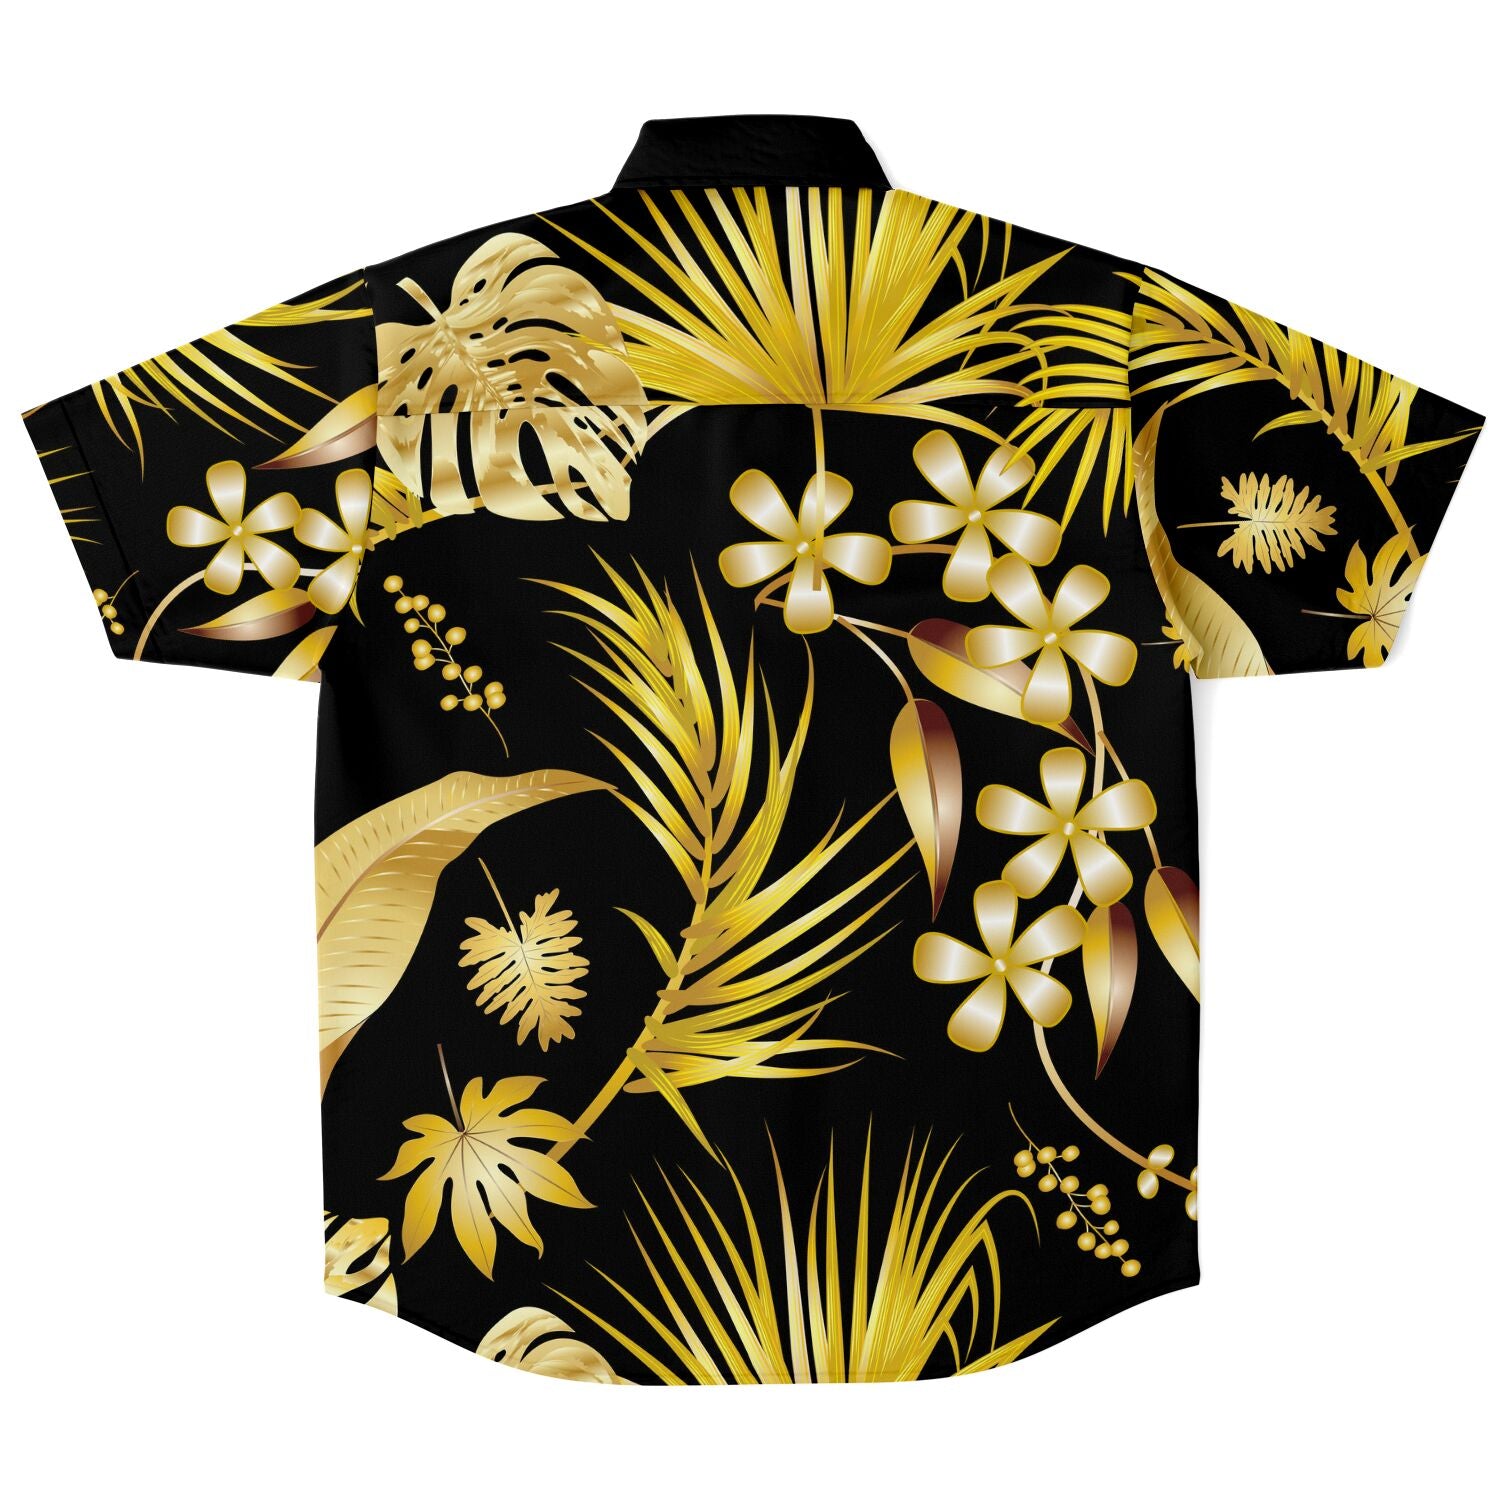 Men's Hawaiian Shirt - Aureate